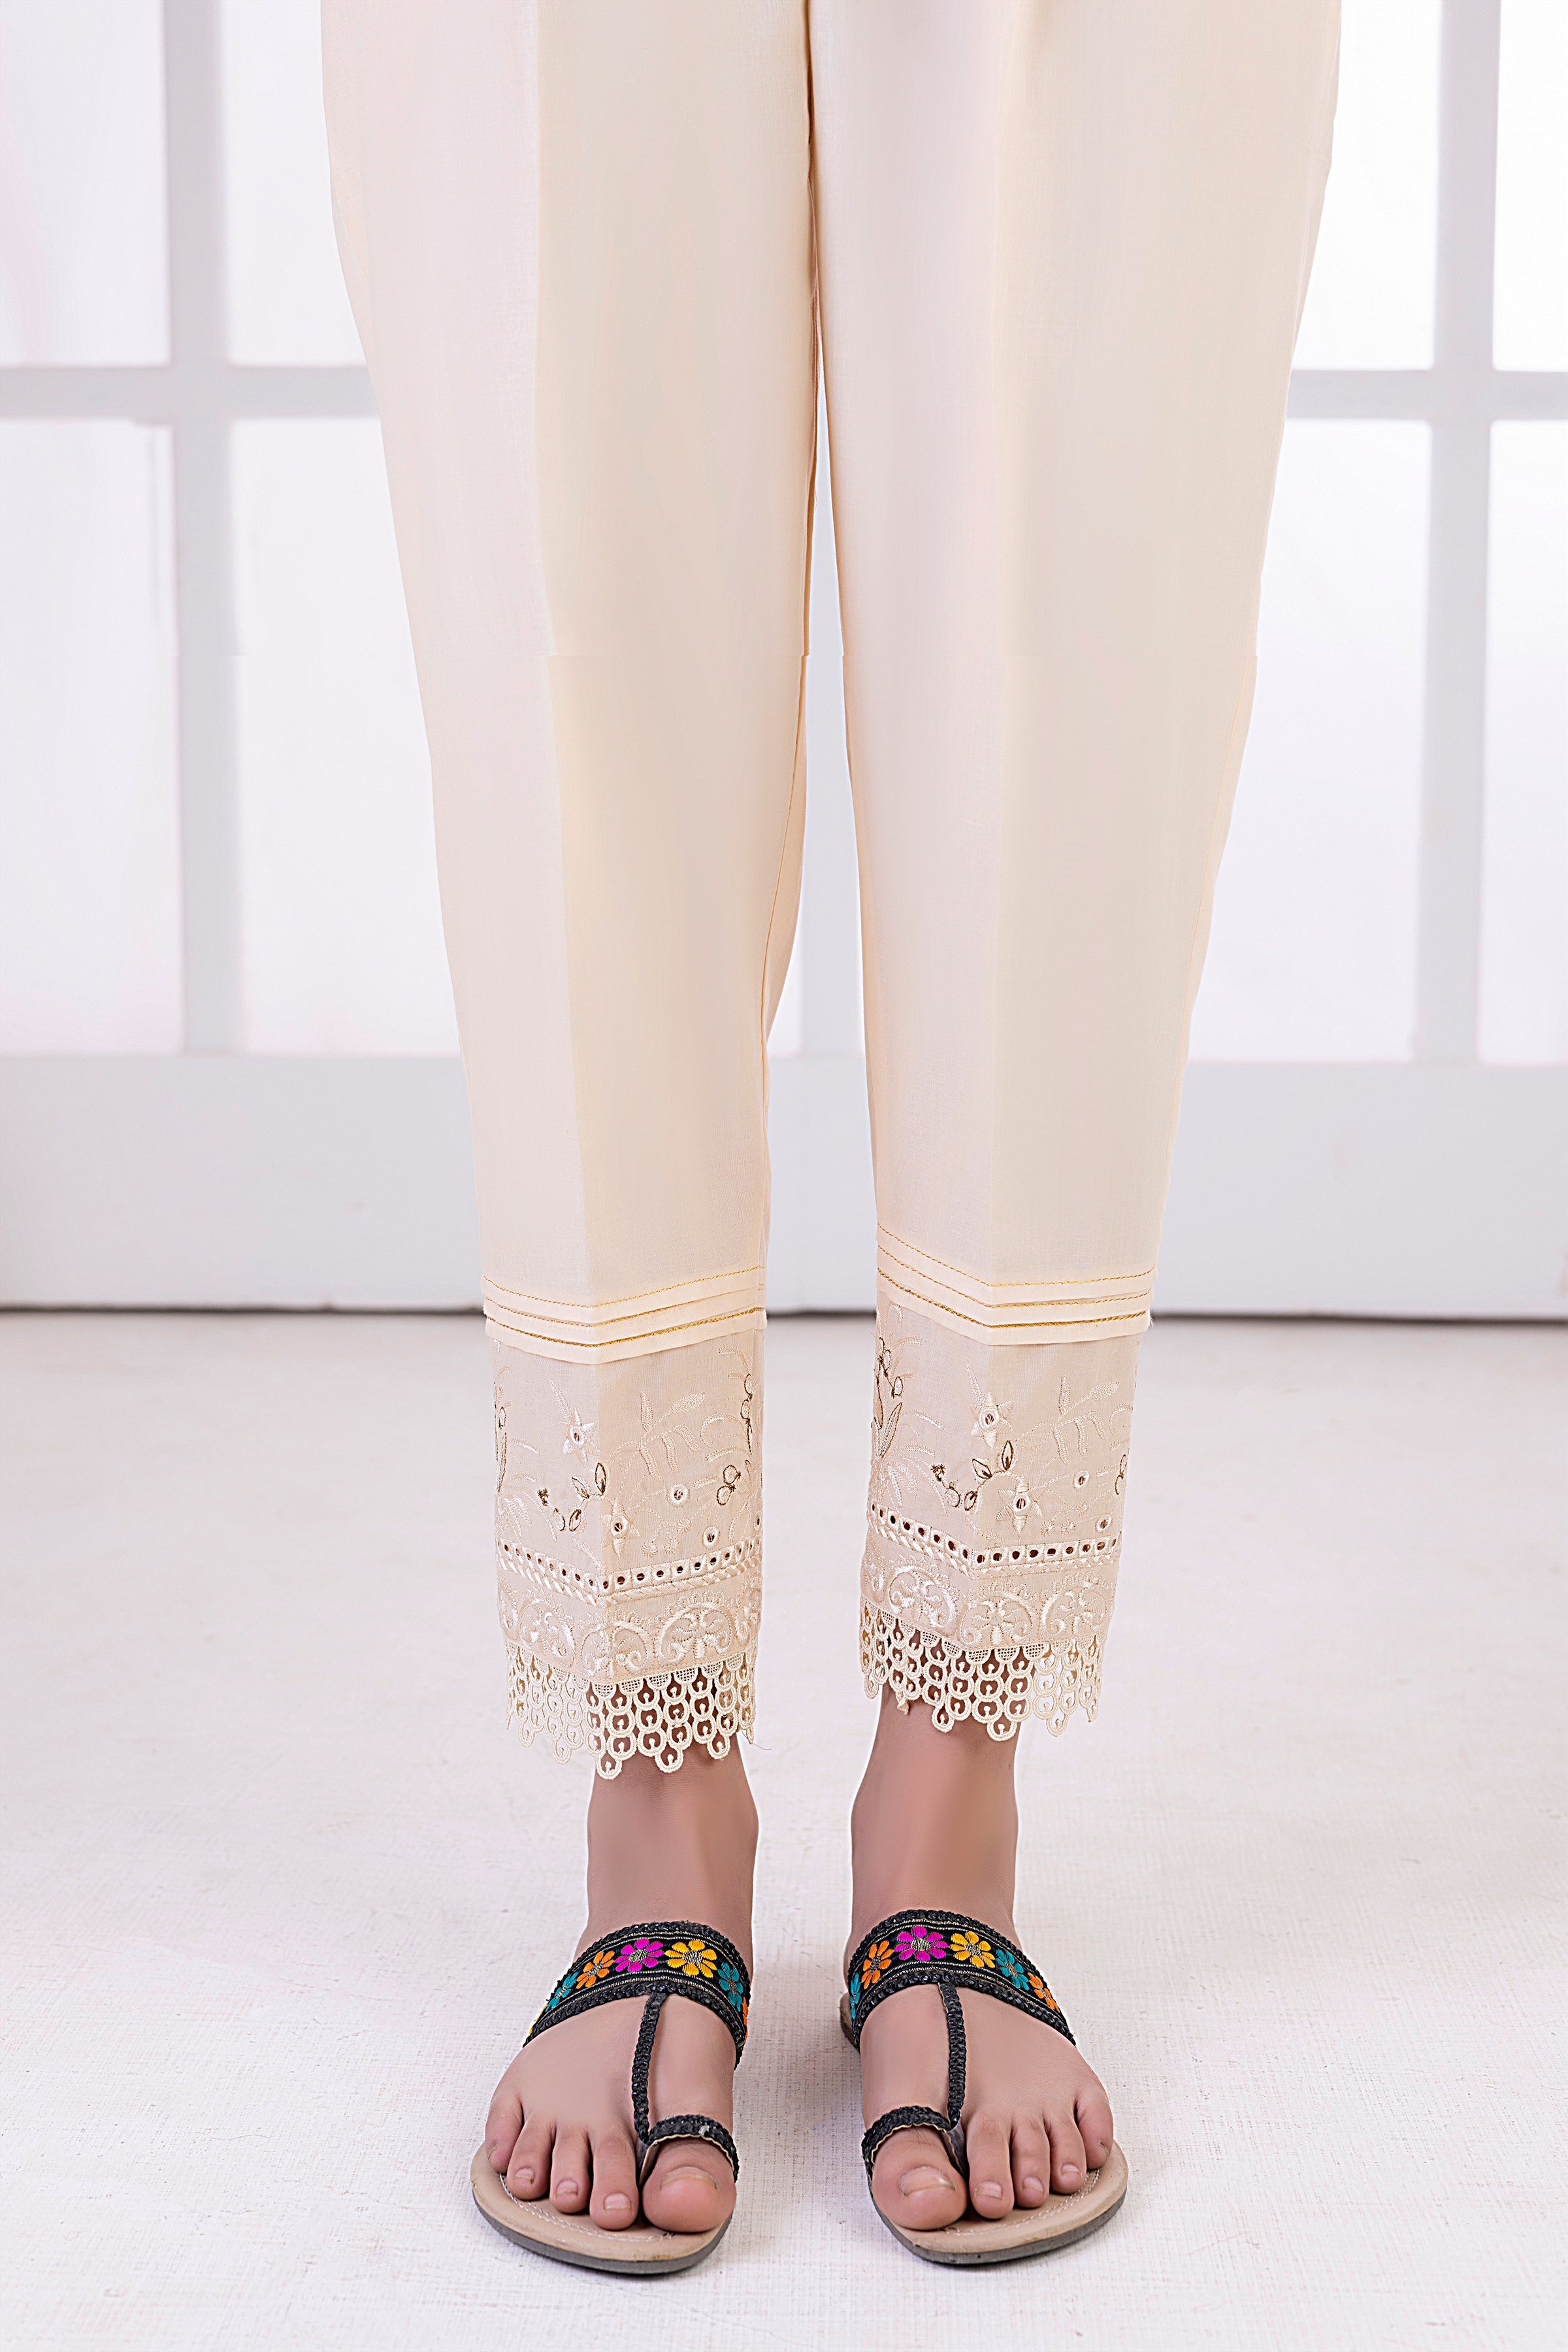 Latest Thread Work Shalwar/ Trousers Designs For Girls/ Ph… | Flickr